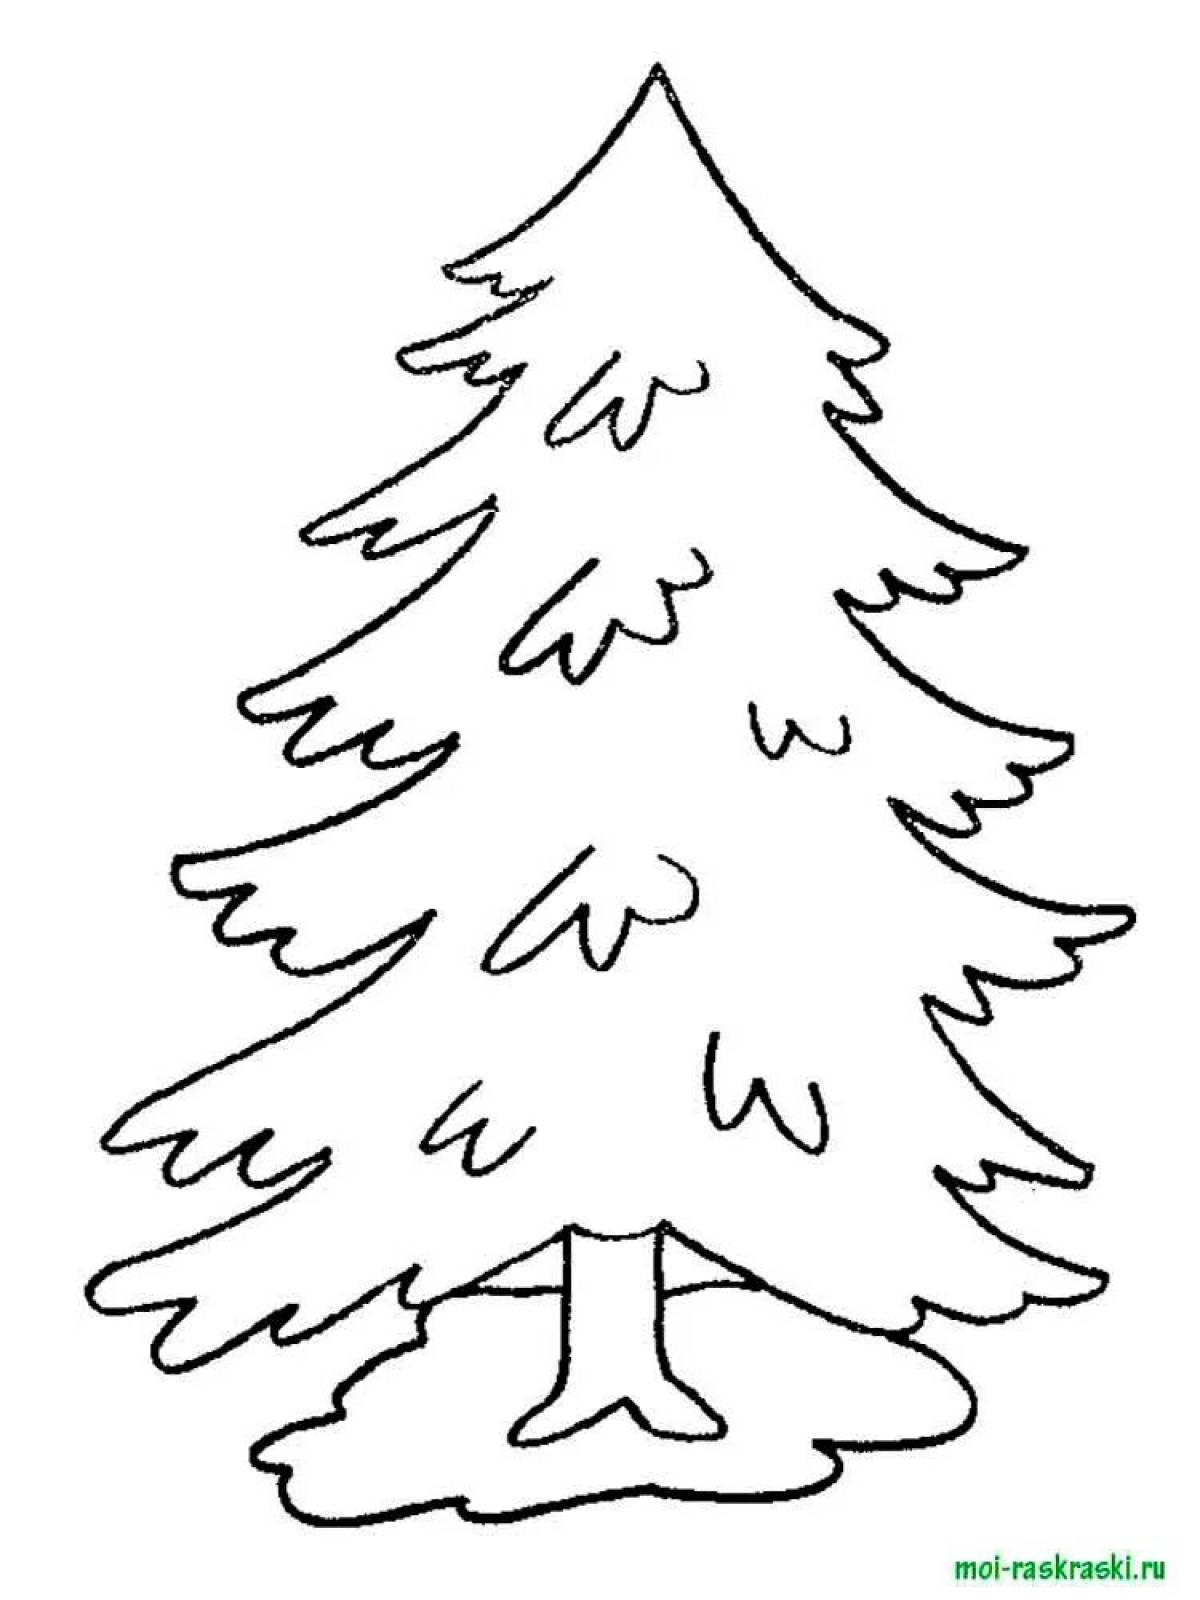 Fat Christmas tree for children